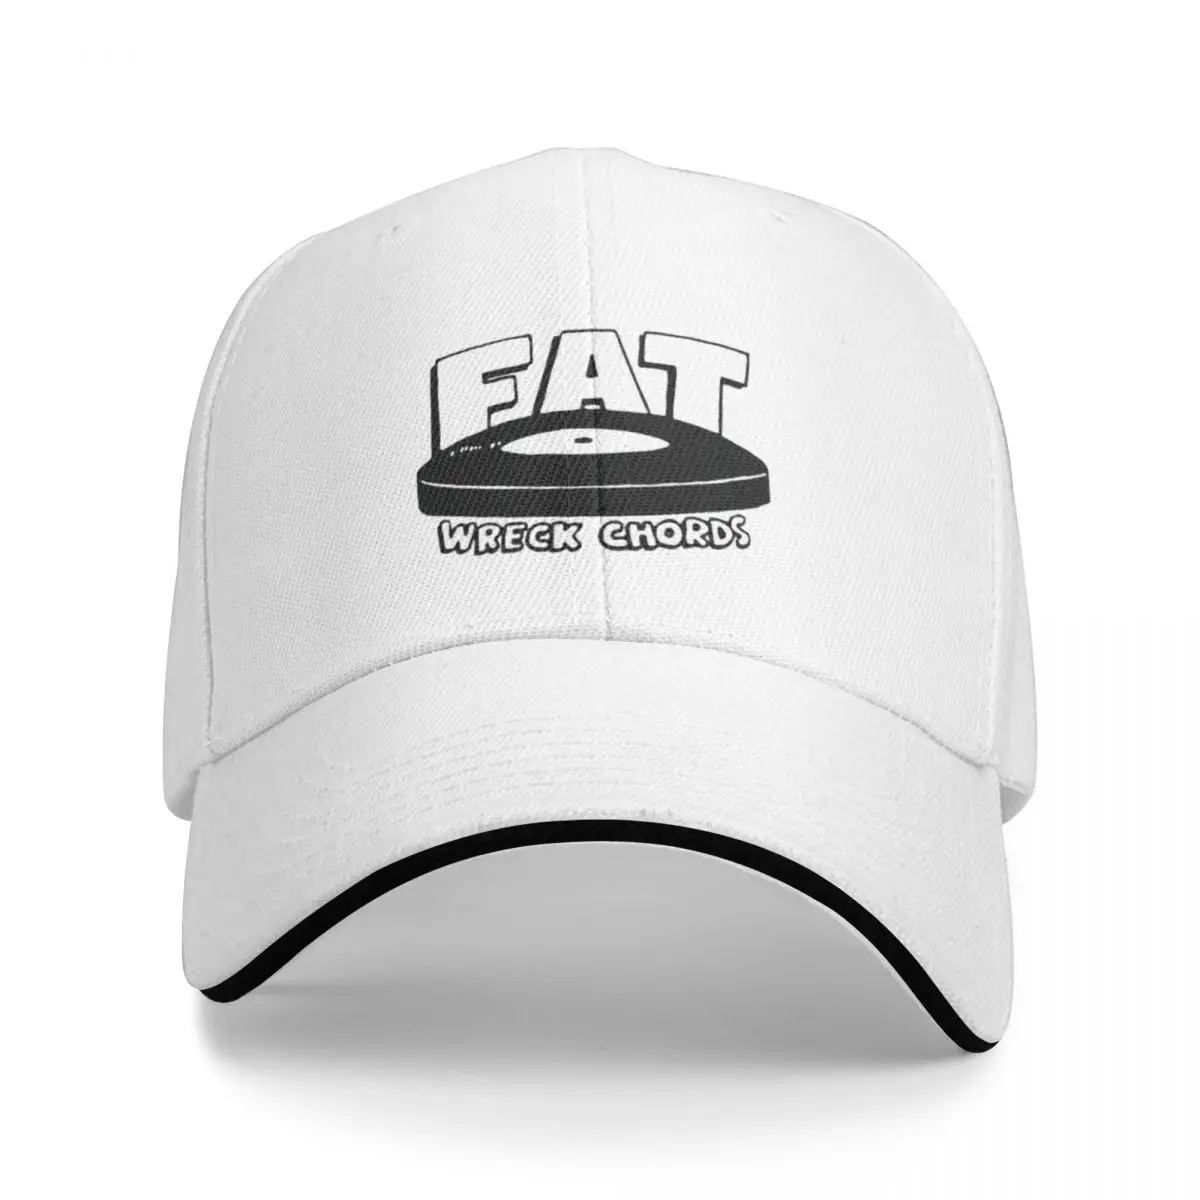 Best Seller - Fat Wreck Chords Merchandise Cap Fashion Casual Baseball Caps Adjustable Hat Hip Hop Summer Unisex Baseball Hats